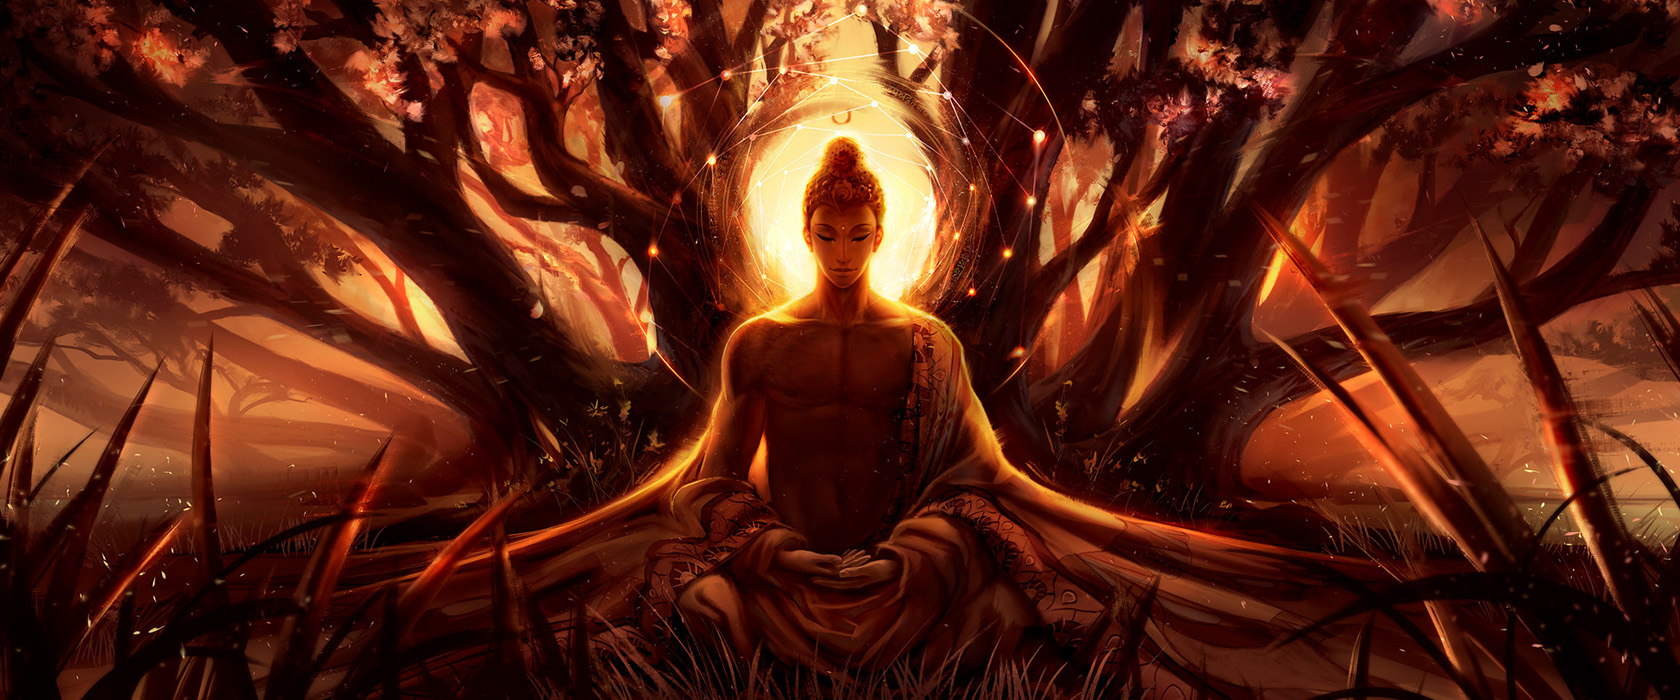 Доклад: Гаутама Сиддхартха (Будда)